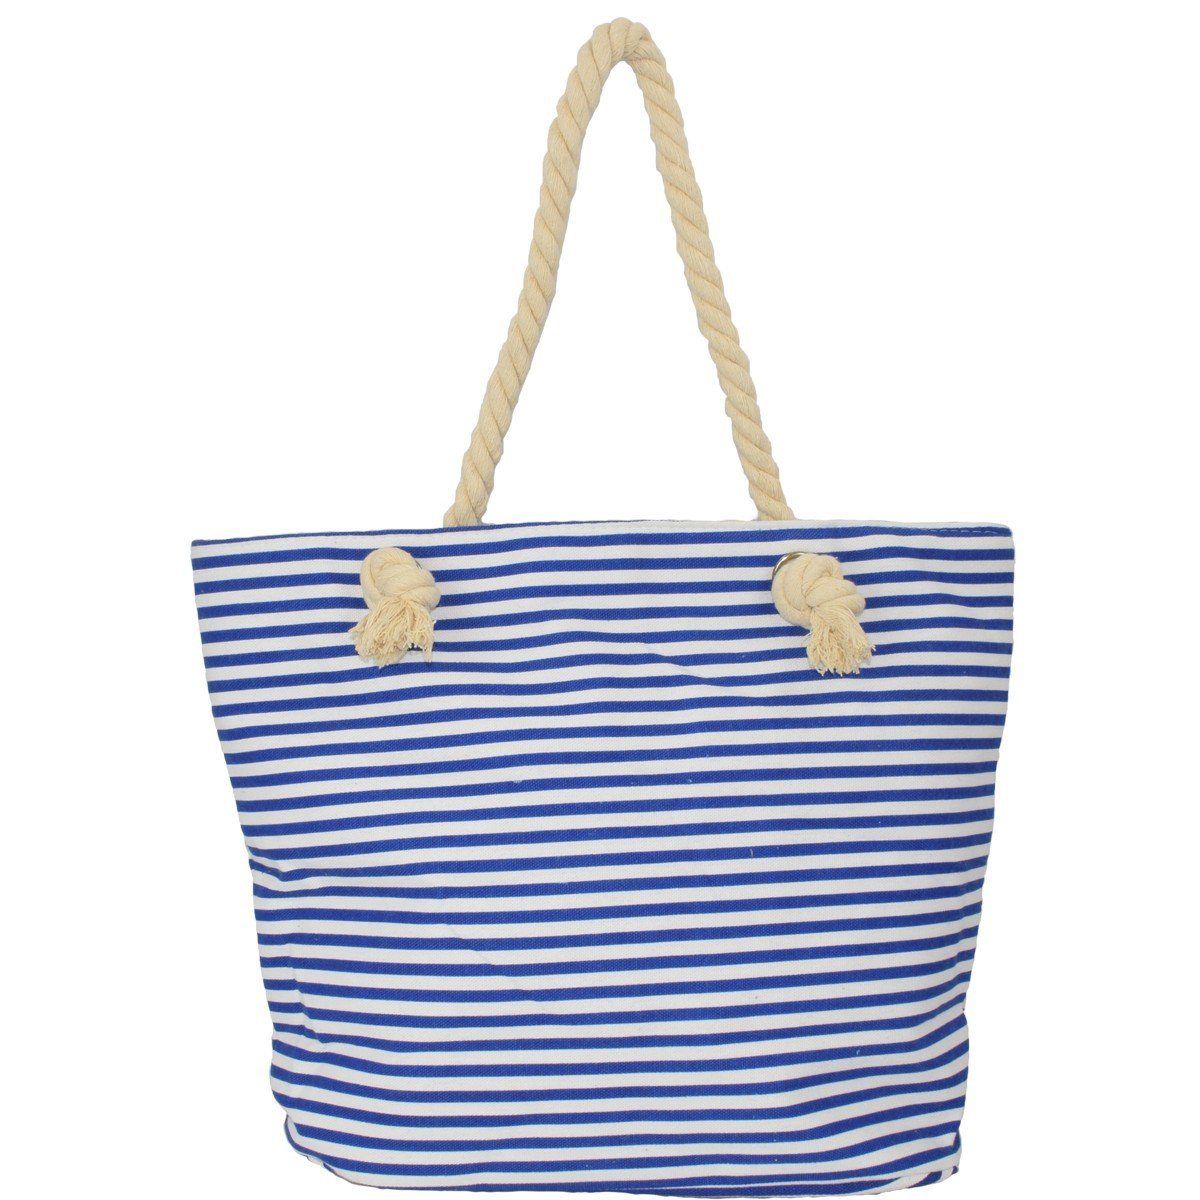 Sonia Originelli Streifen Shopper Anker maritim gestreift Strandtasche blau